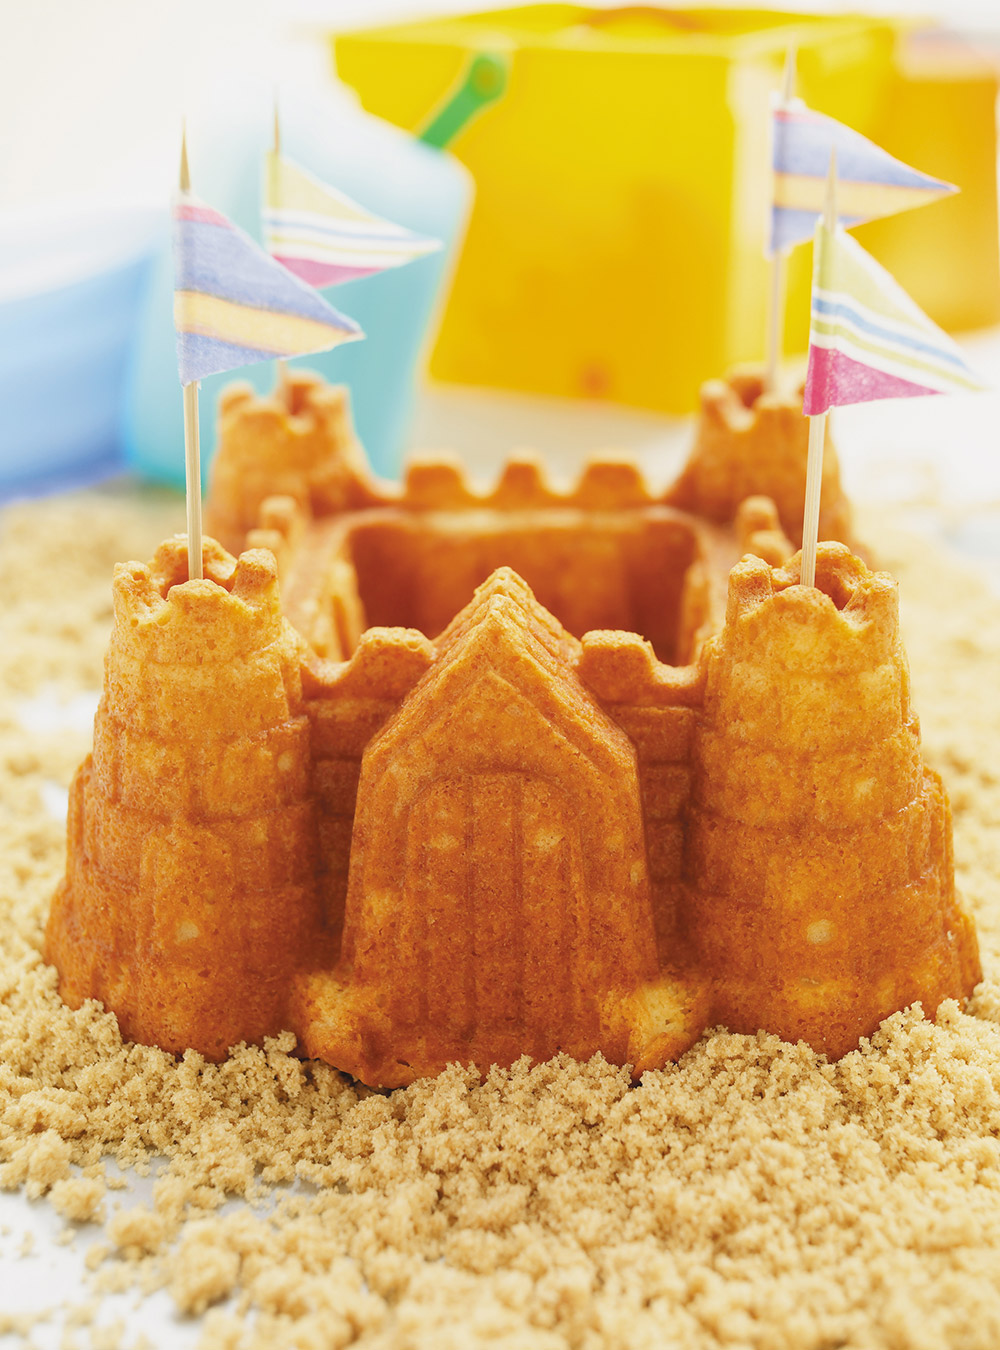 Sandcastle birthday cake - Recipes - delicious.com.au